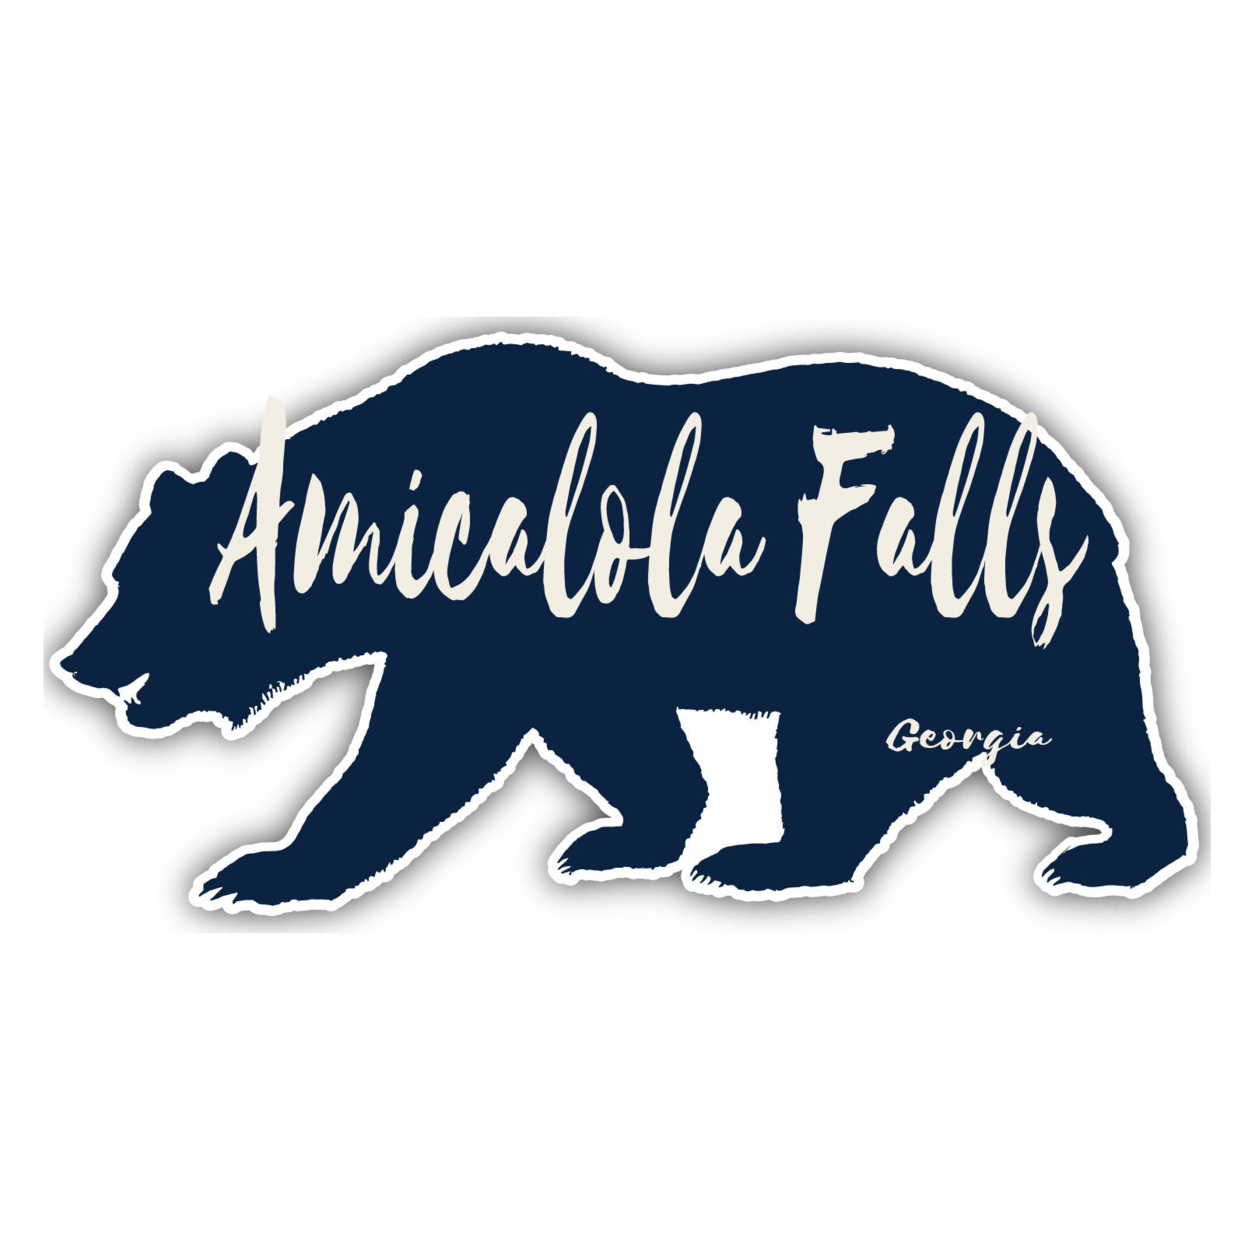 Amicalola Falls Georgia Souvenir Decorative Stickers (Choose Theme And Size) - 4-Pack, 2-Inch, Bear